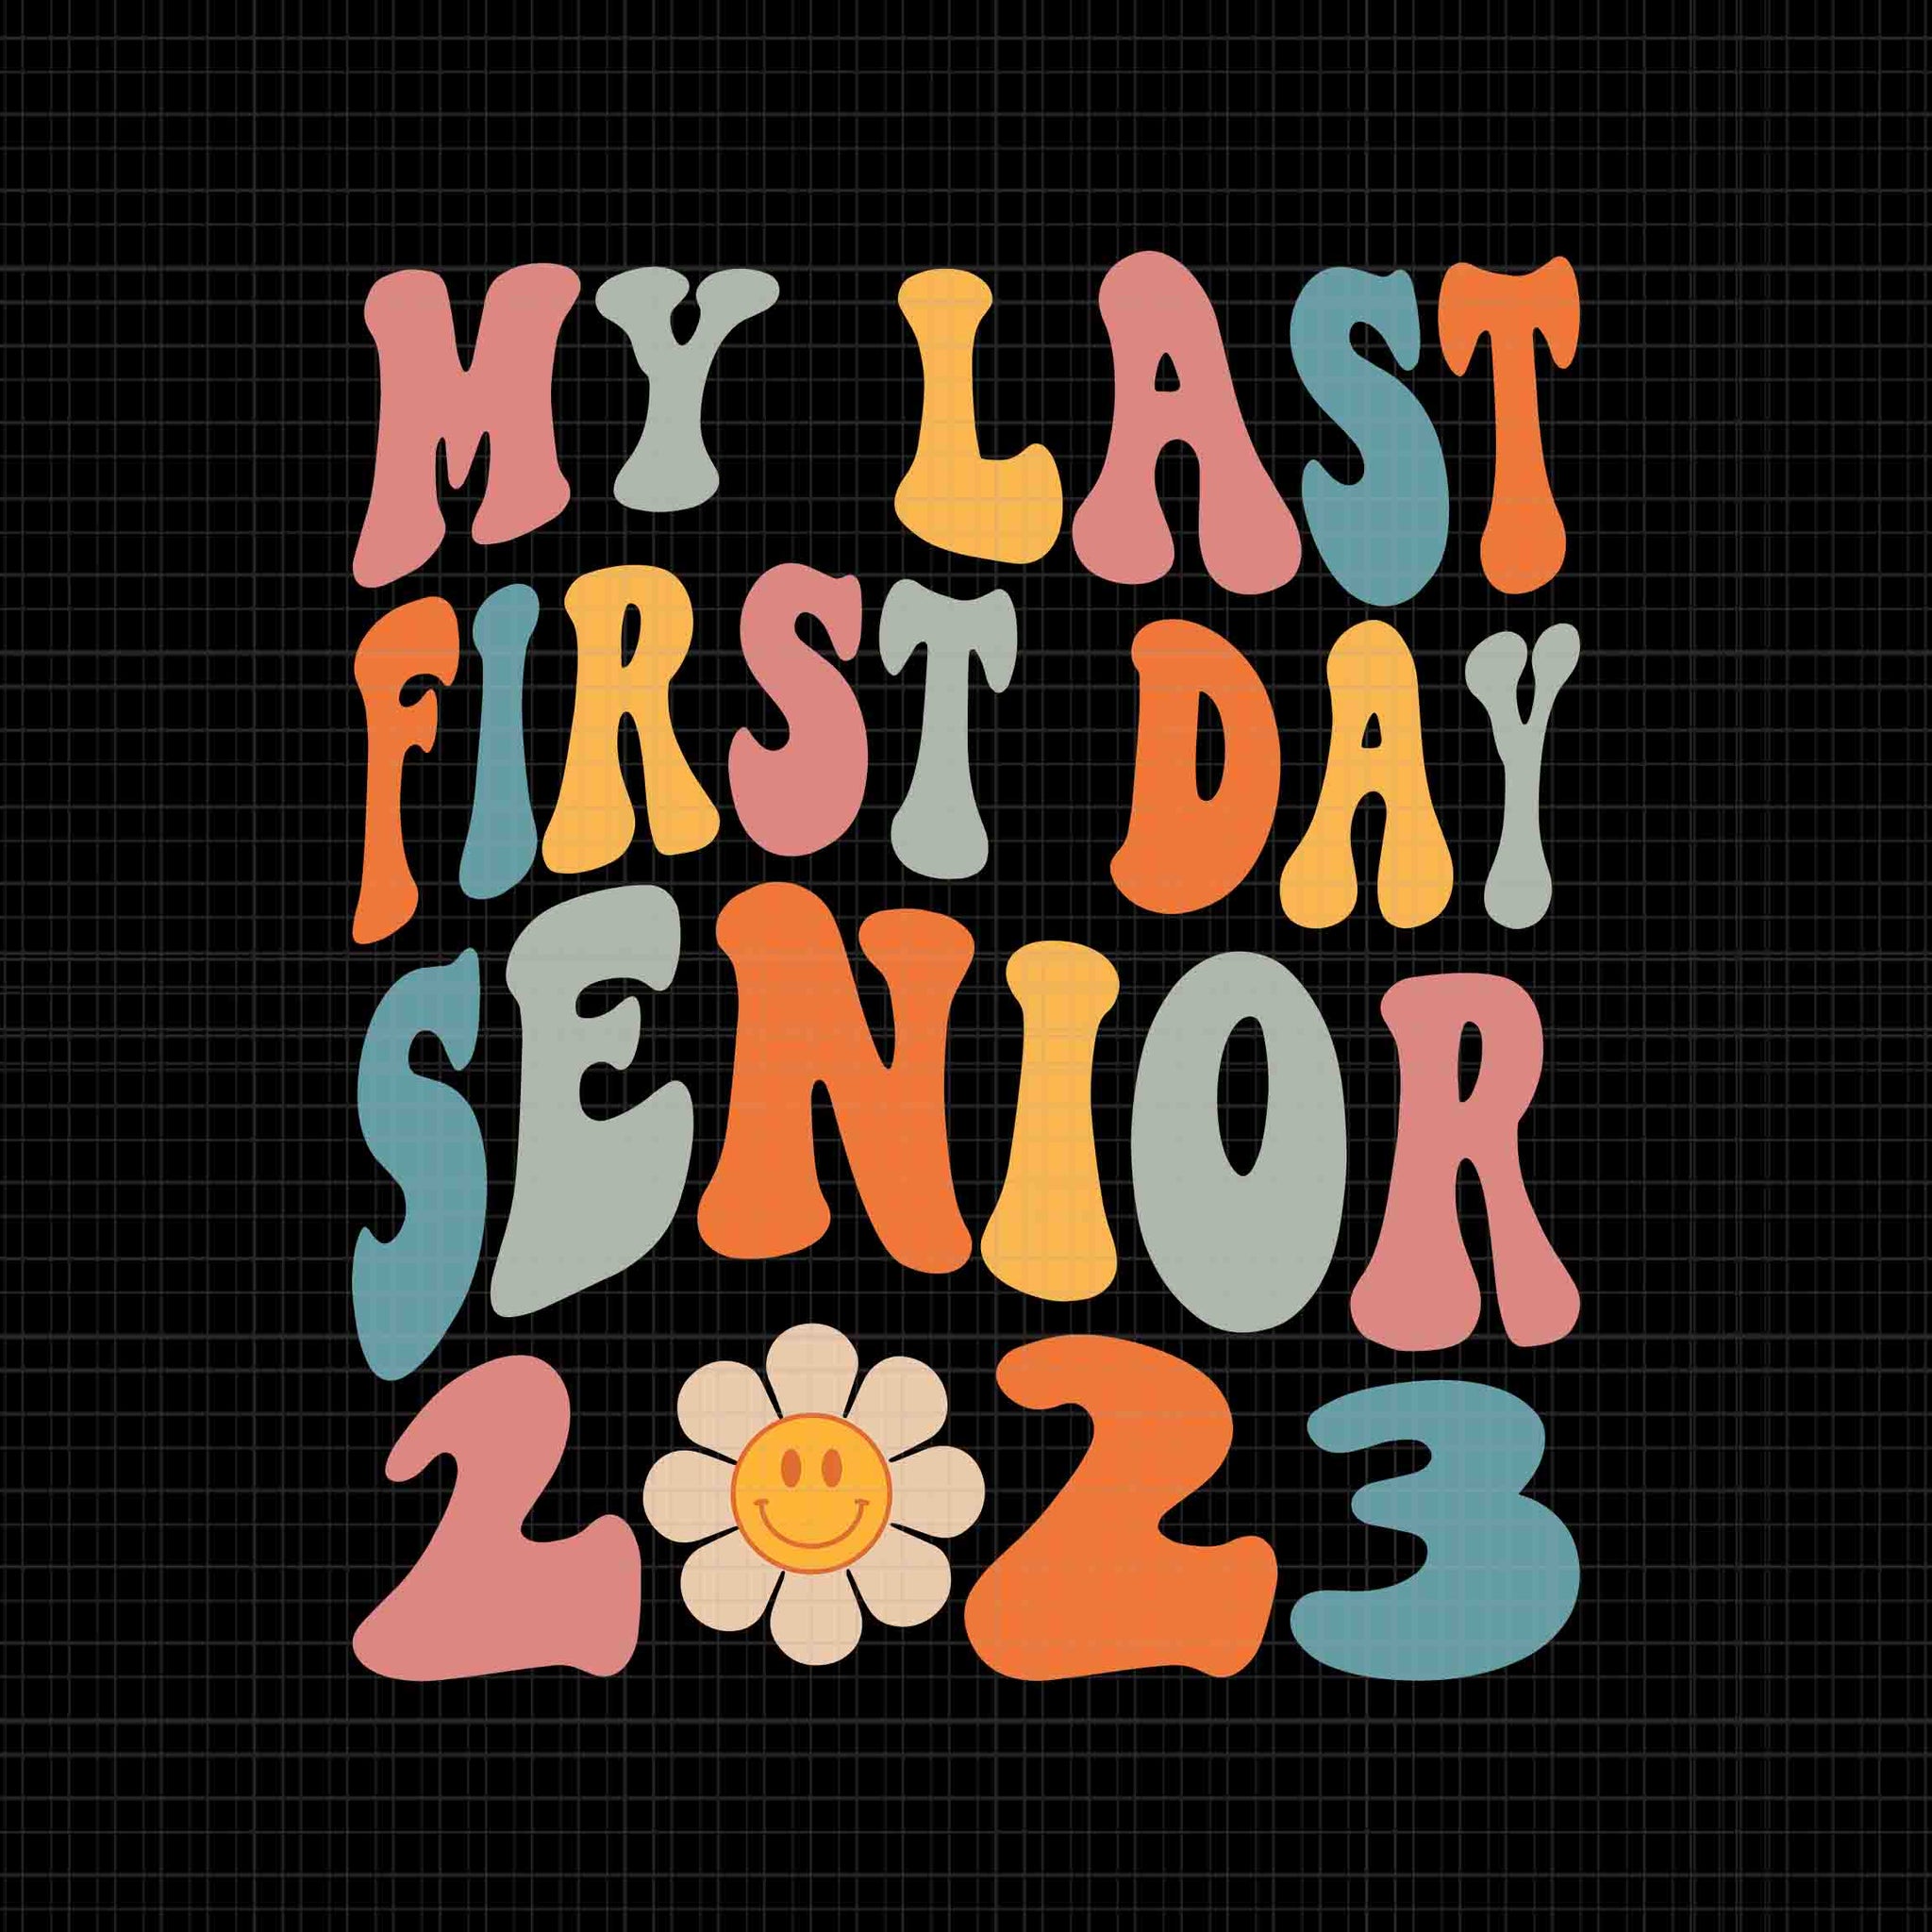 My Last First Day Senior 2023 Svg, Back To School Class of 2023, Back To School Svg, Senior 2023 Svg, School Svg